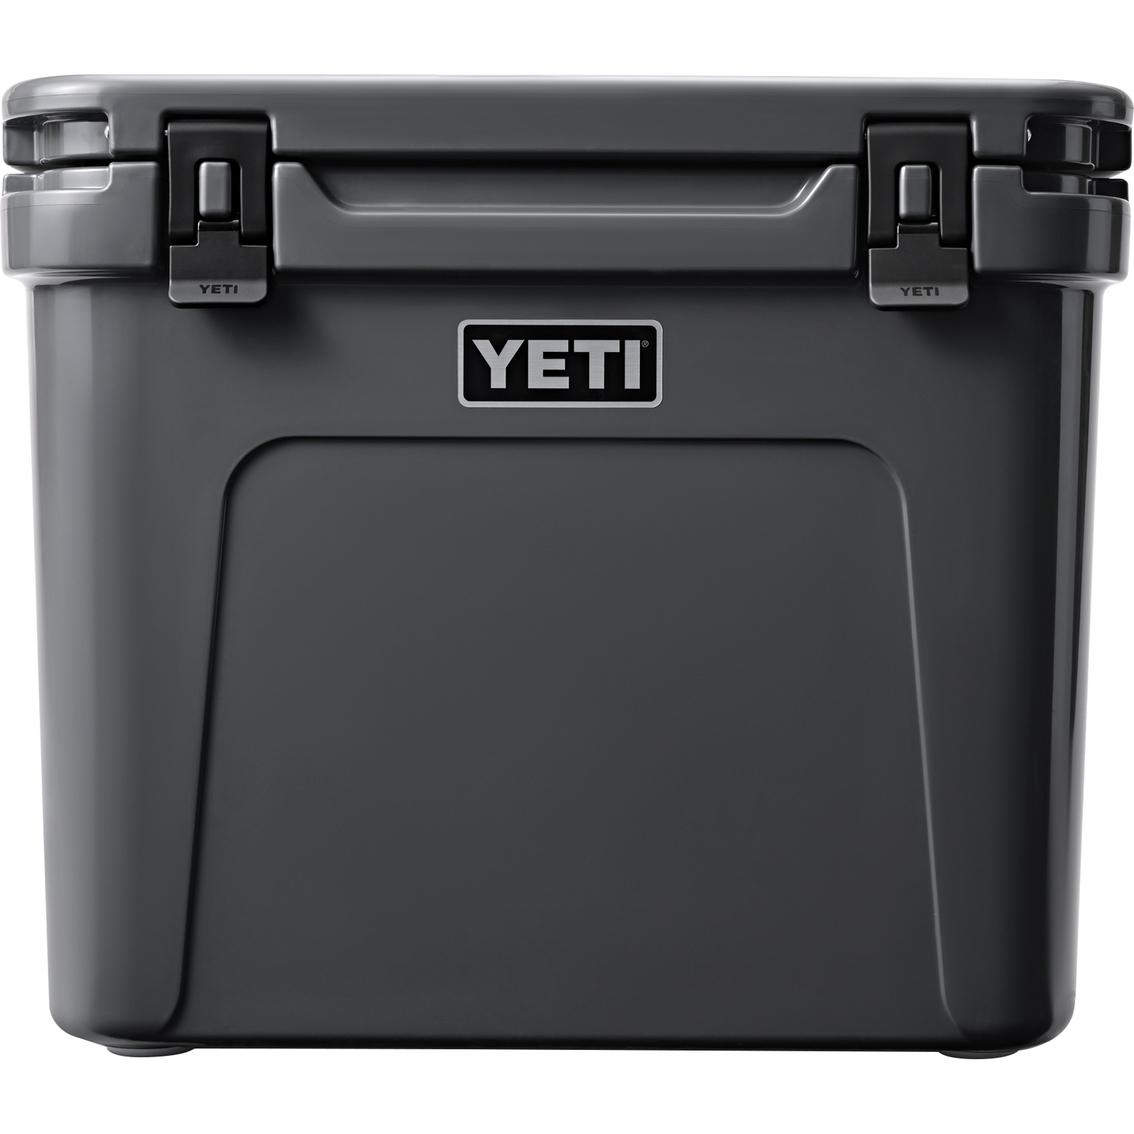 Yeti Roadie 60 Cooler Charcoal - Image 1 of 10